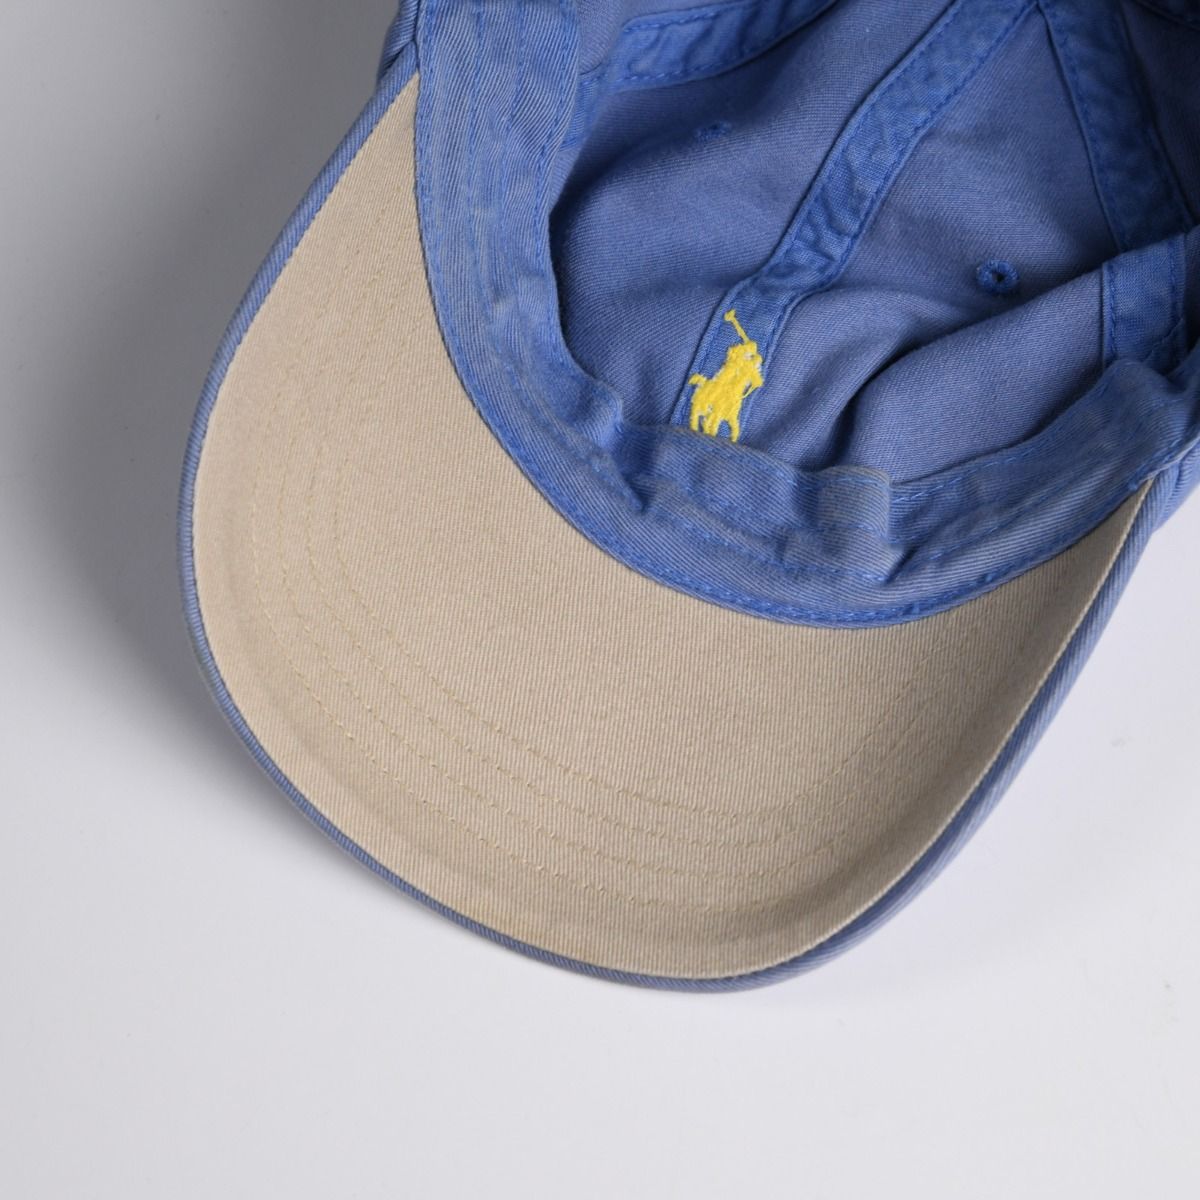 Ralph Lauren Hat Light Blue With Yellow